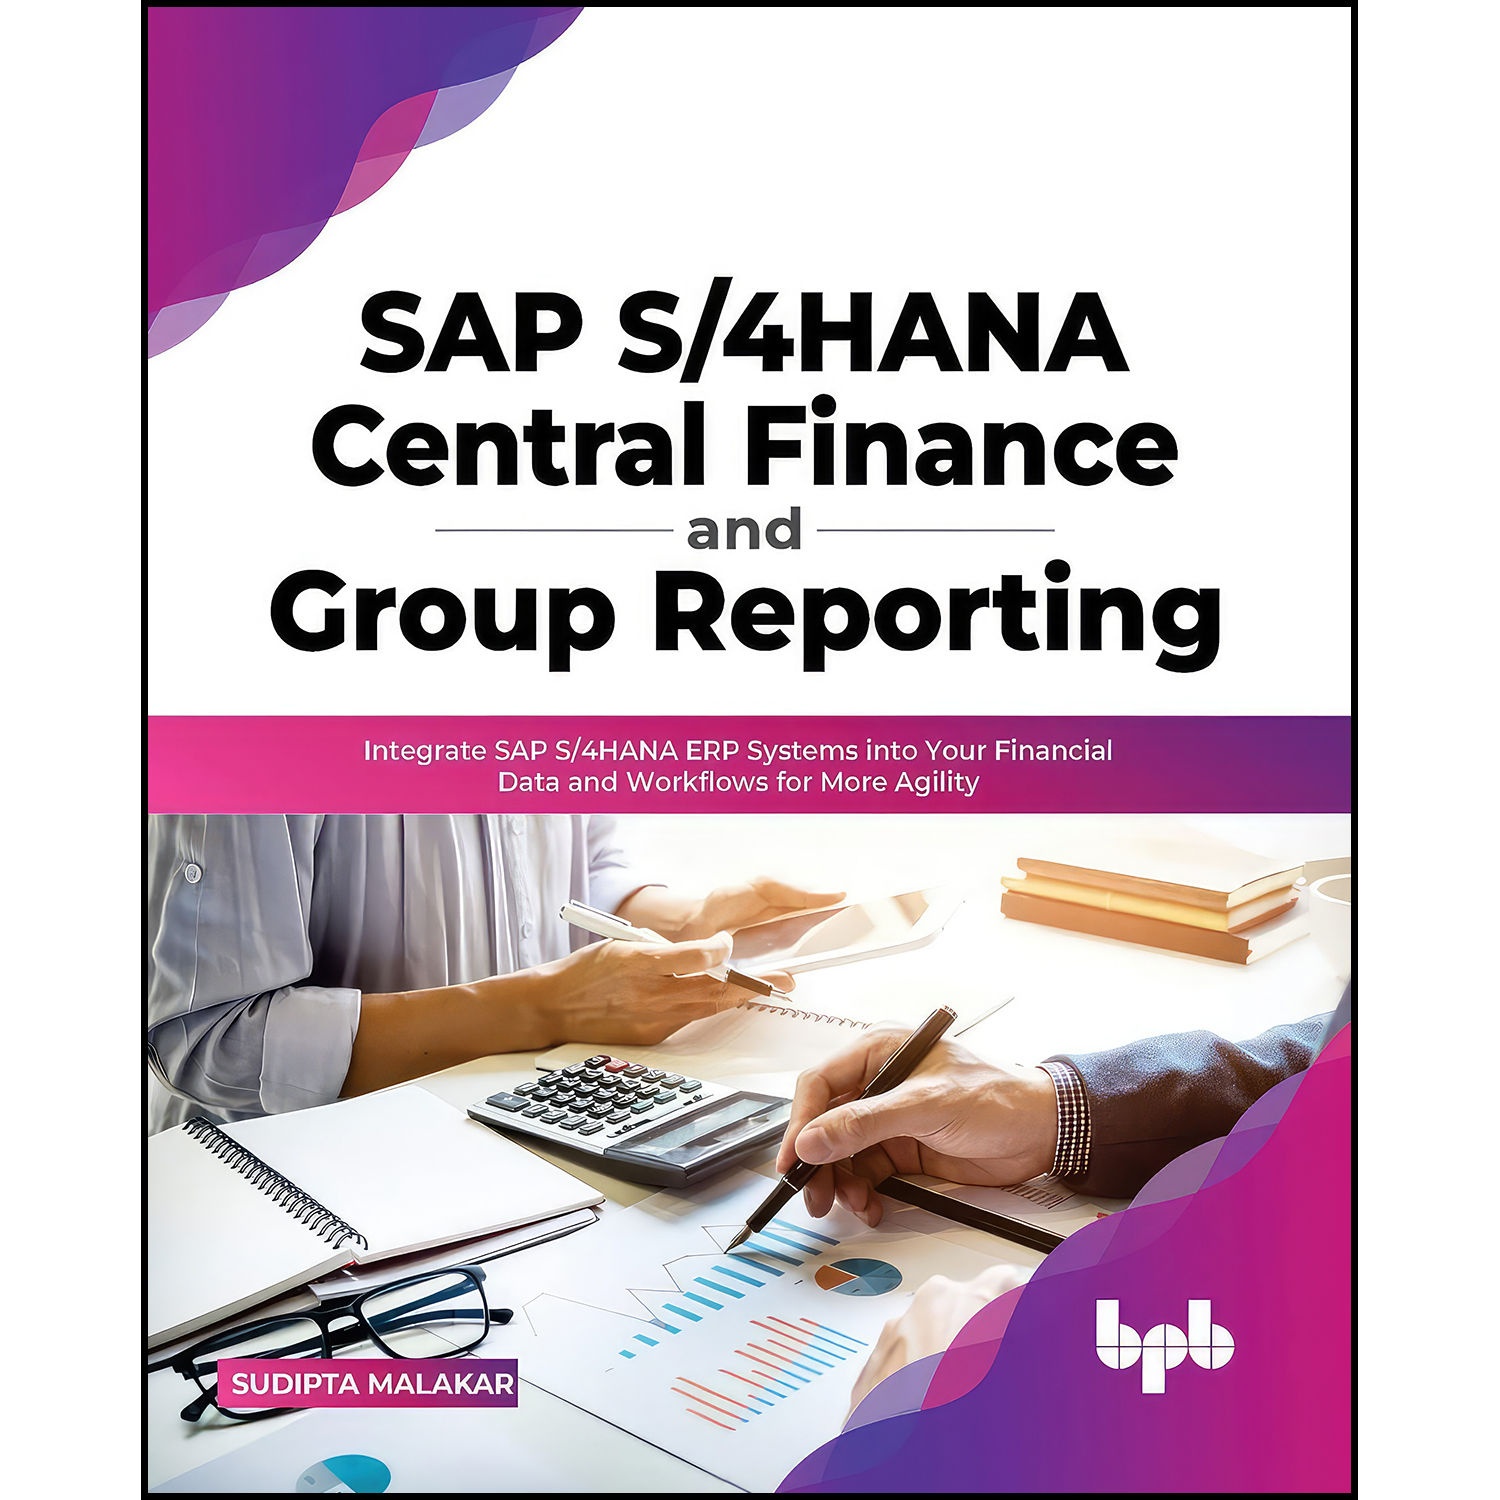 کتاب SAP S/4HANA Central Finance and Group Reporting اثر Sudipta Malakar انتشارات بله